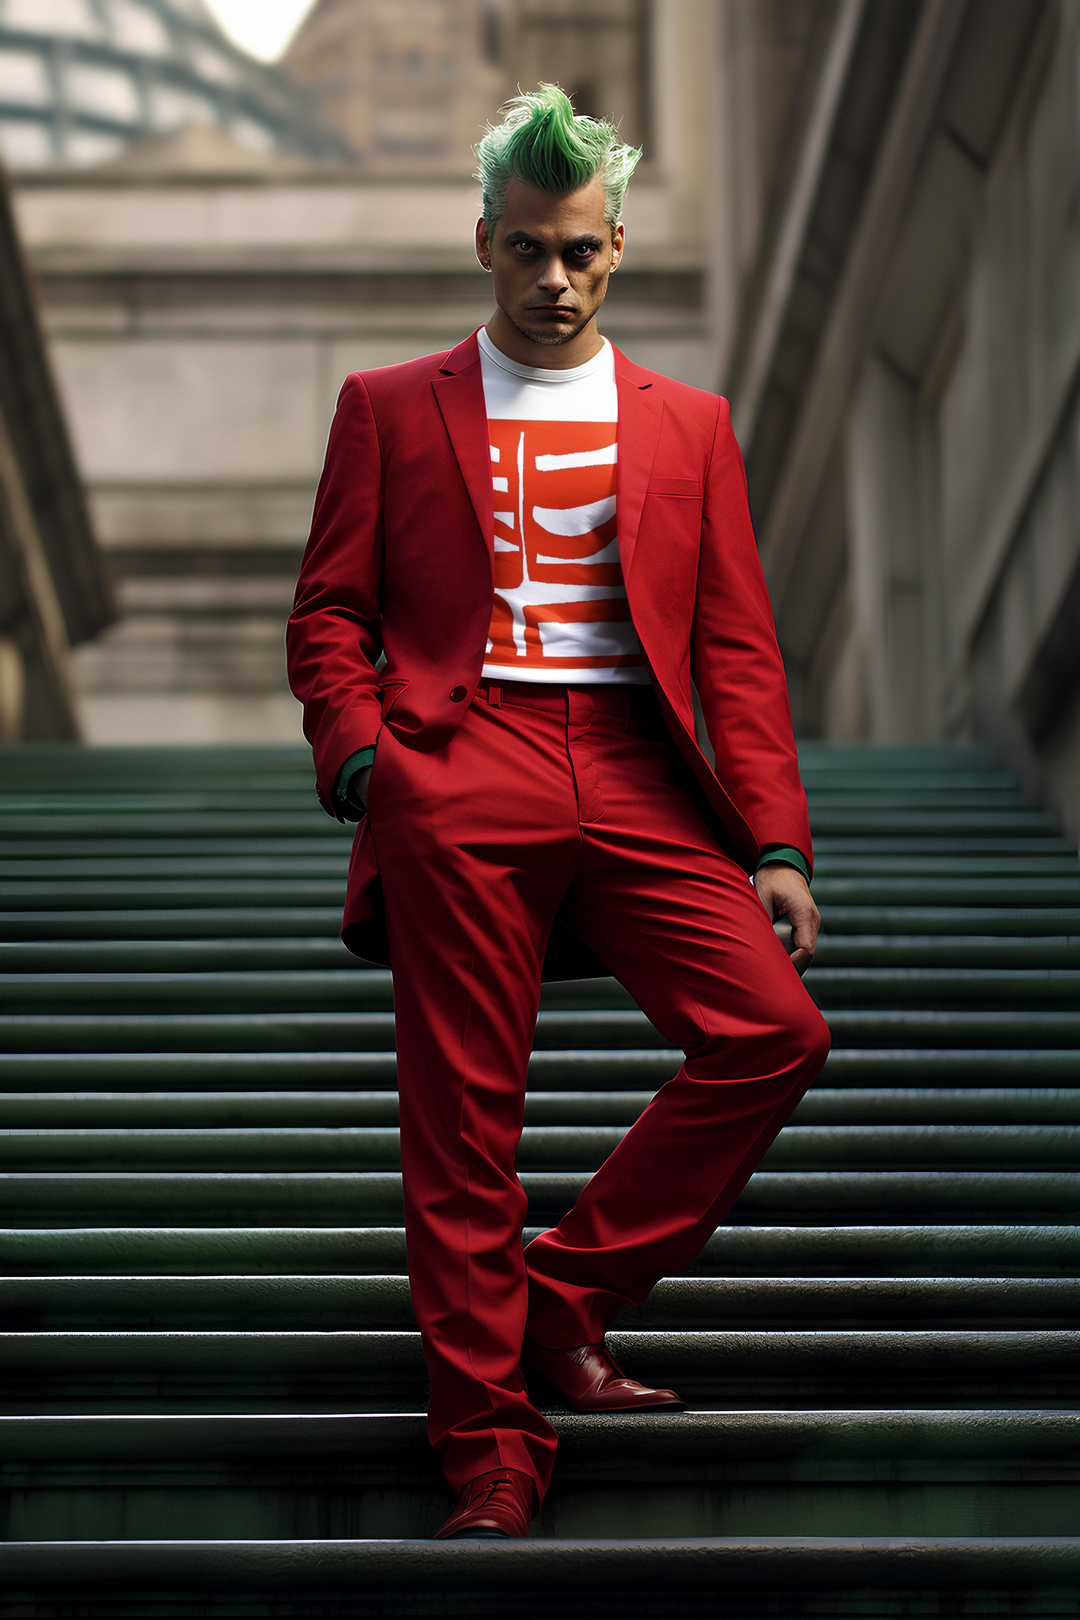 joker inspired man wearing abstract t shirt BI 500 in Red 